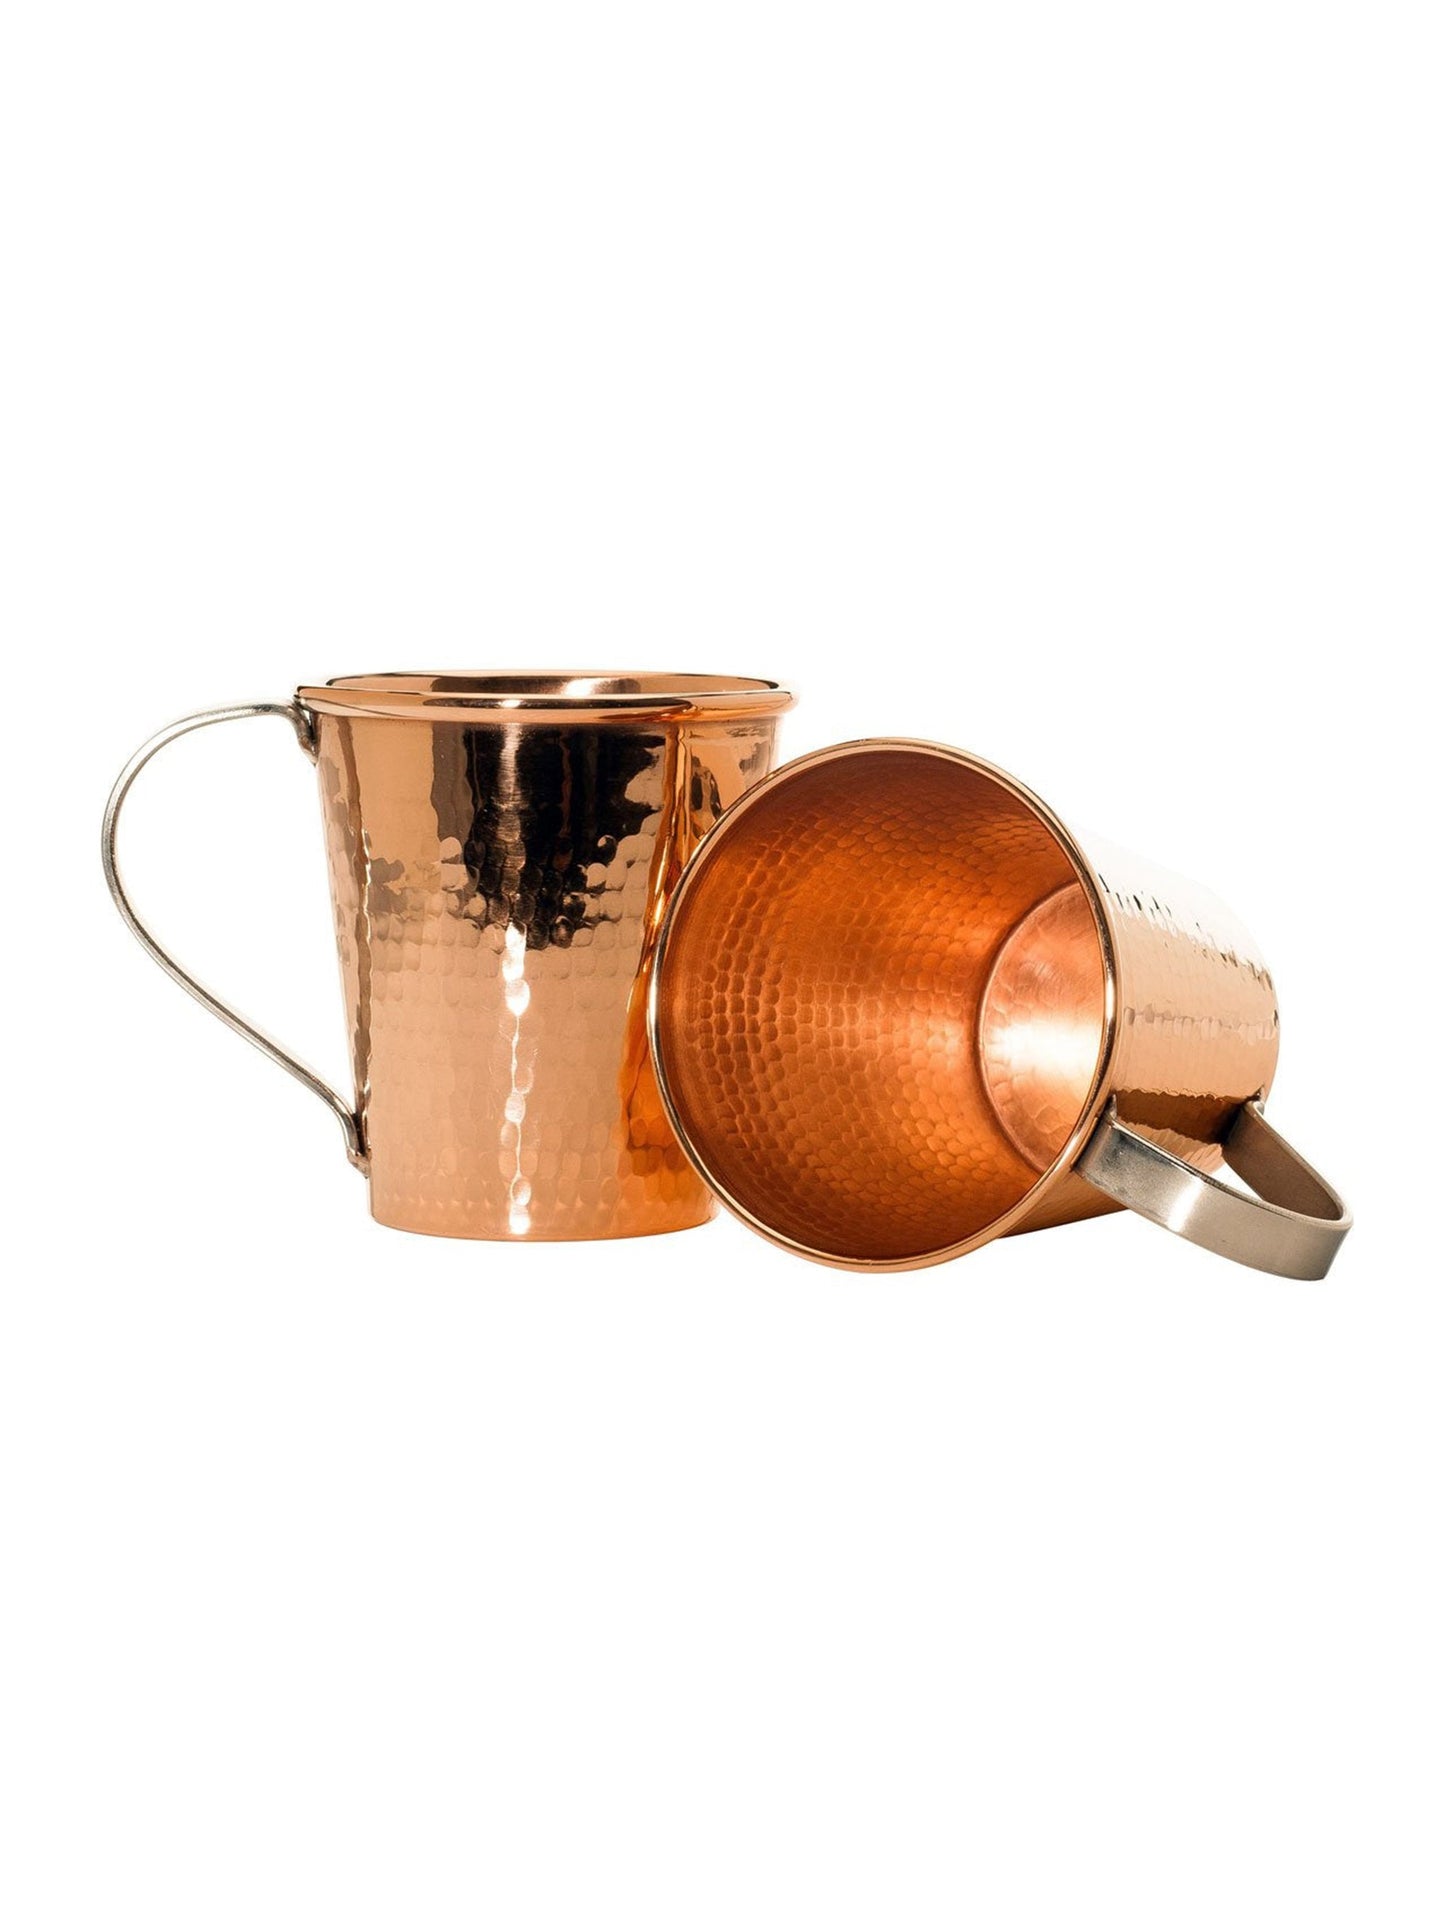 Sertodo Copper Moscow Mule Mug Stainless Steel Handle Weston Table